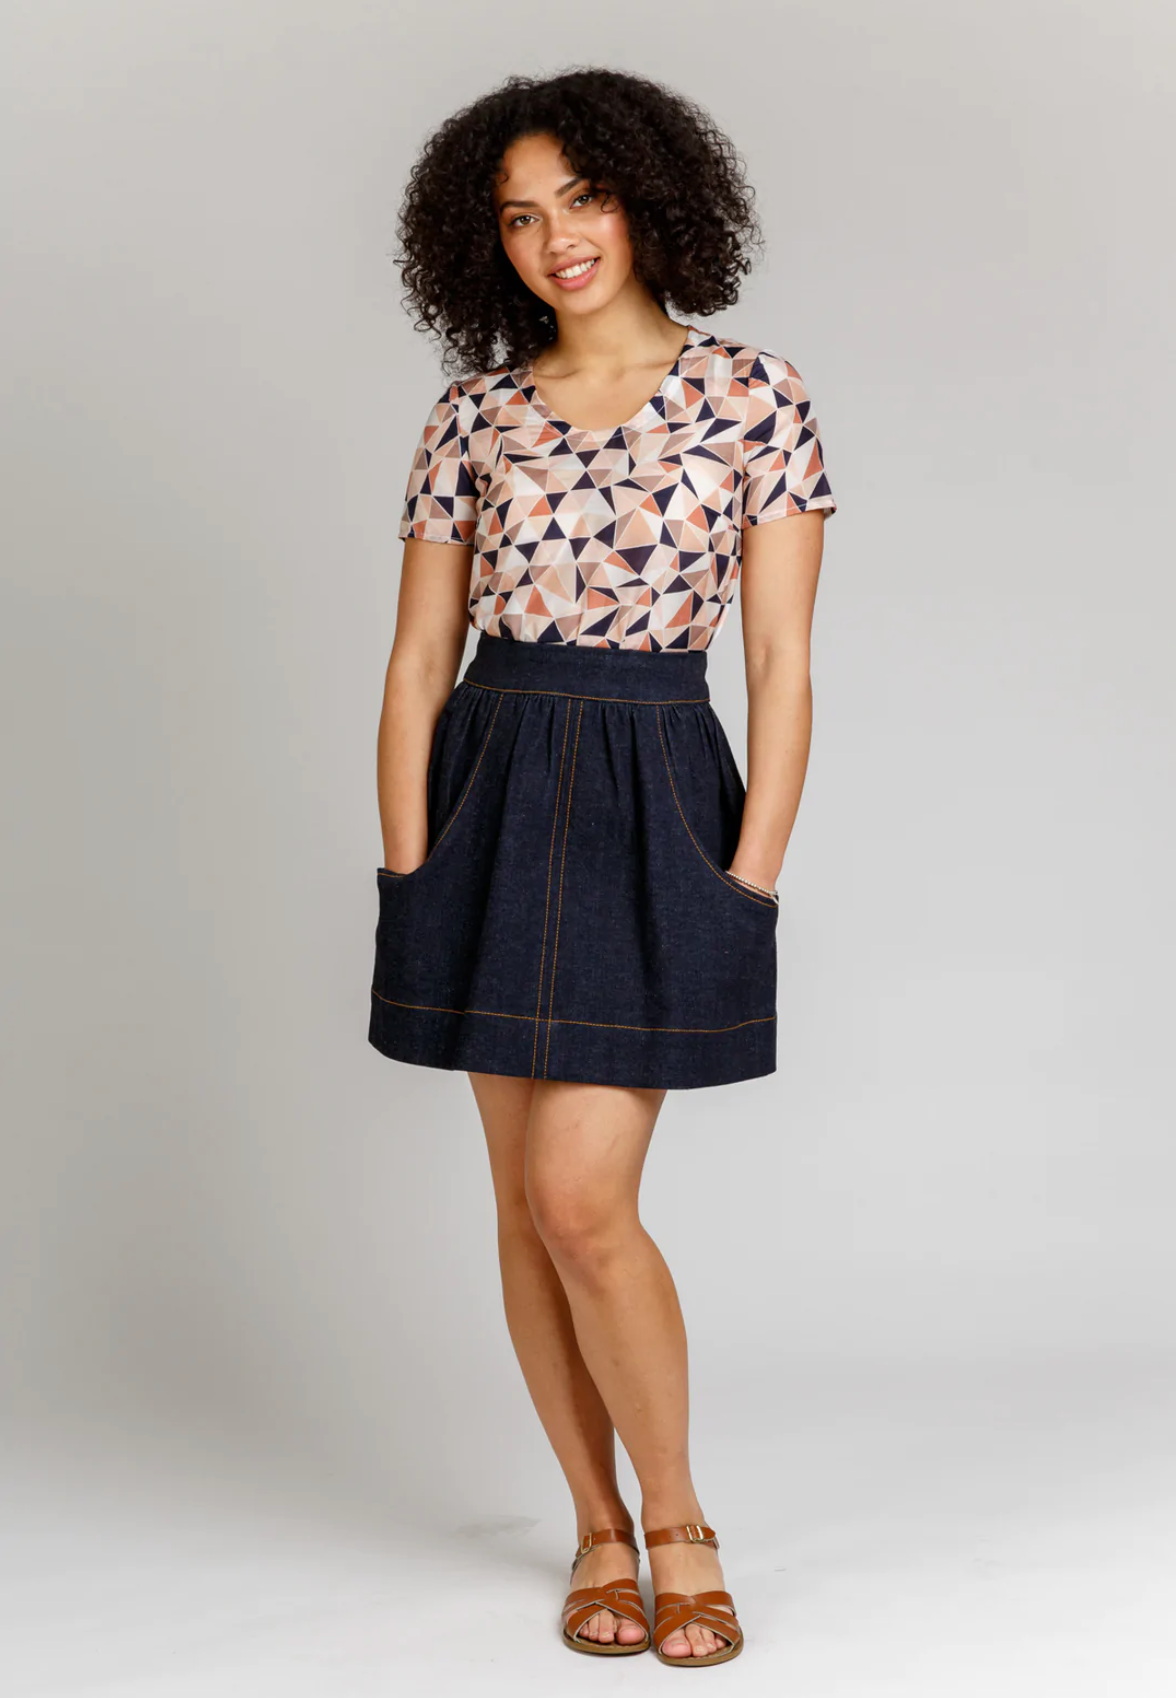 Brumby skirt - Paper pattern - MEGAN NIELSEN